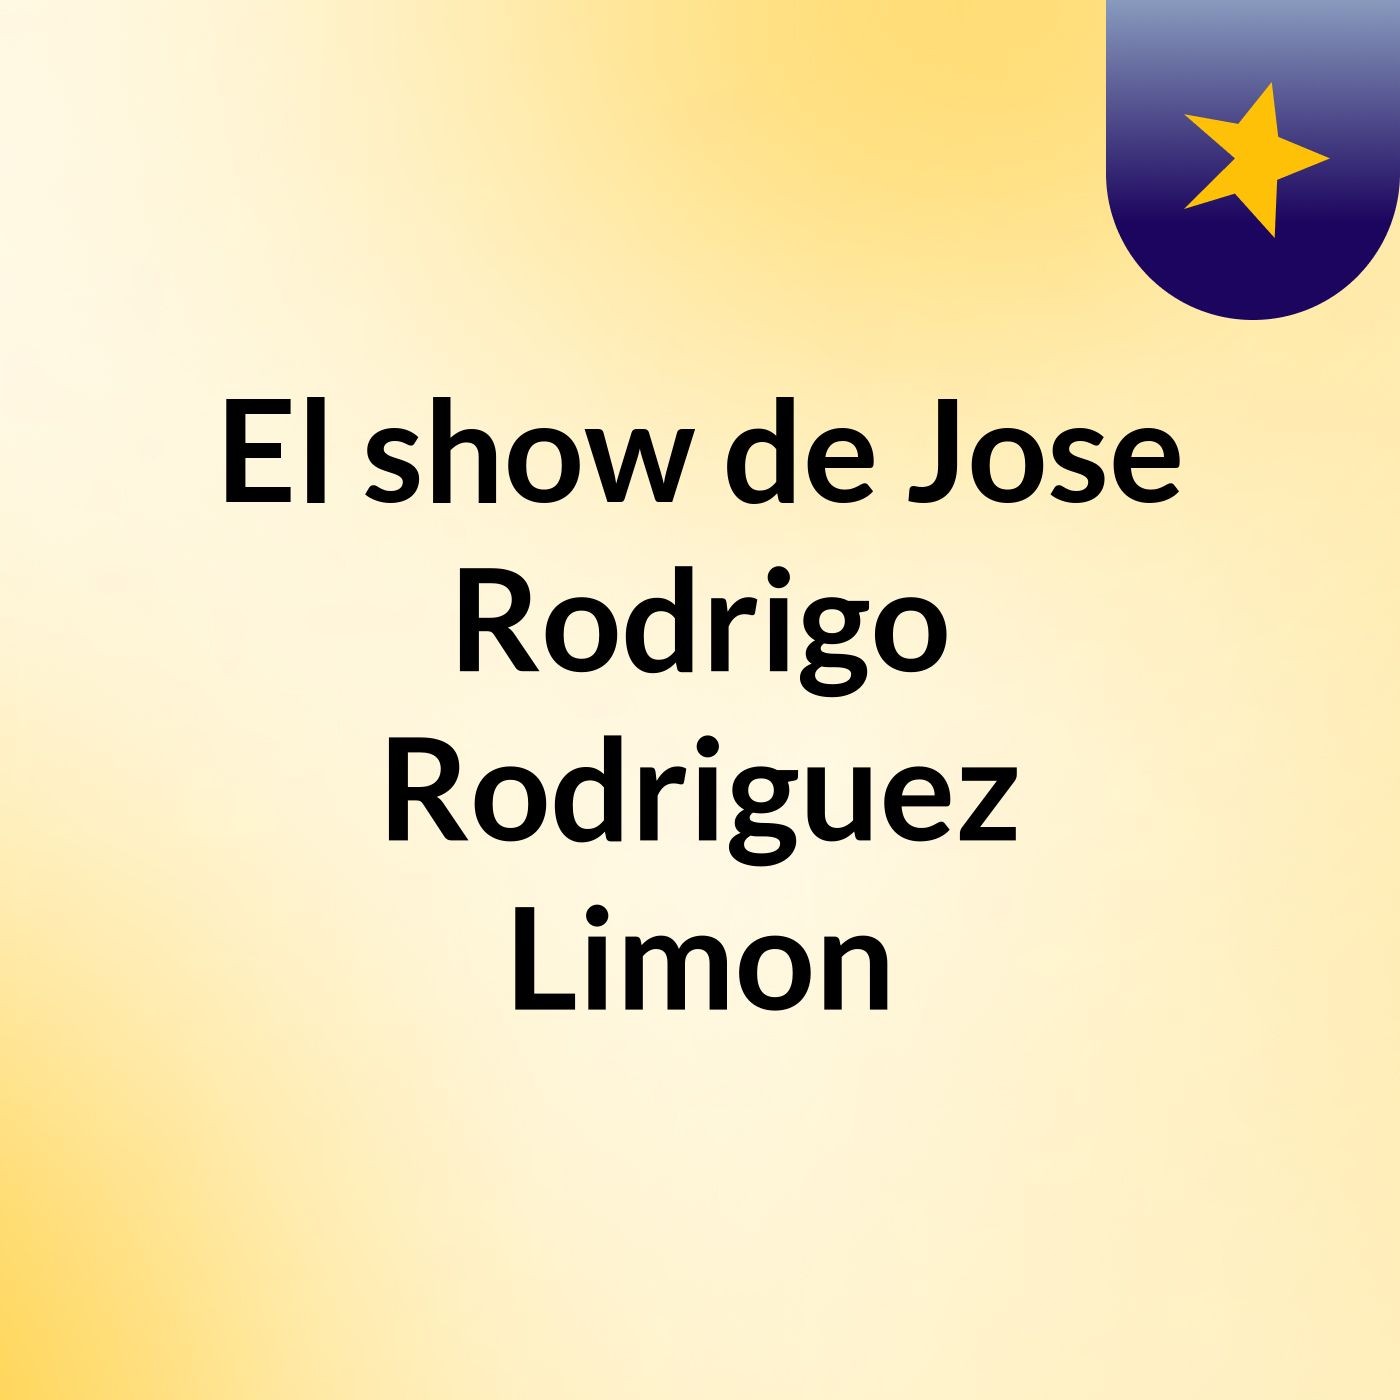 El show de Jose Rodrigo Rodriguez Limon